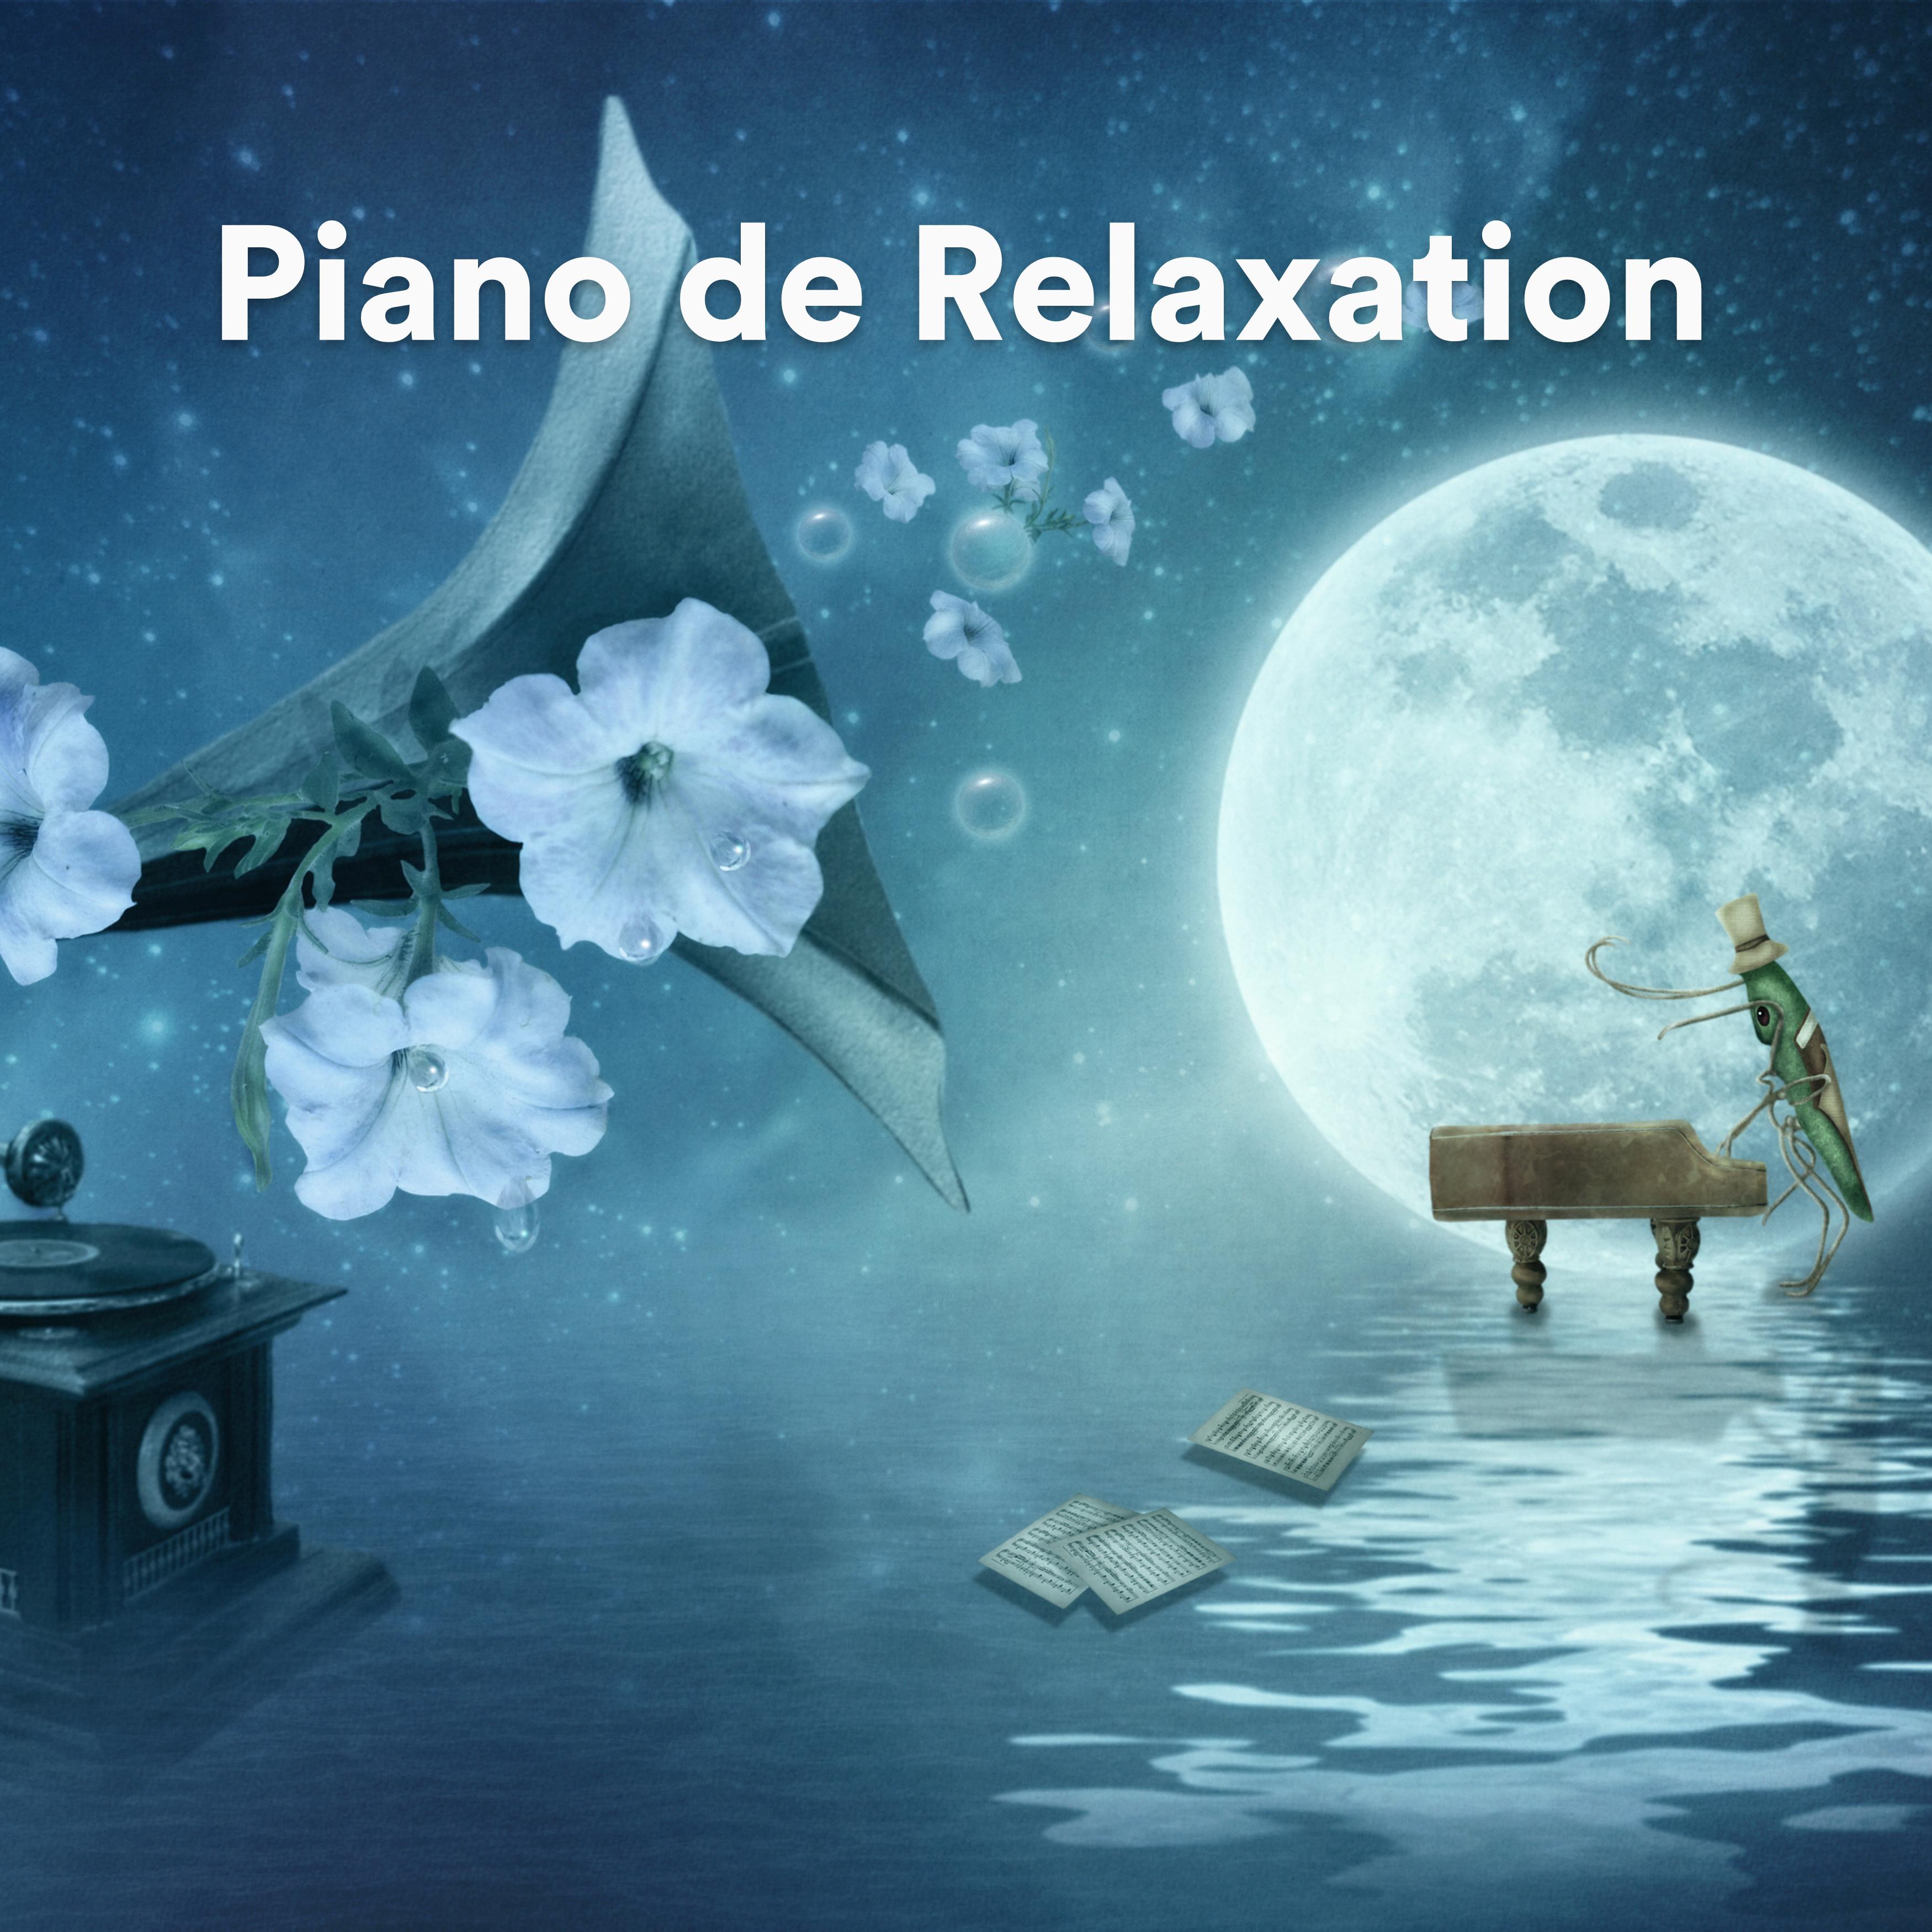 Music for Deep Meditation - Douce musique de piano pour dormir